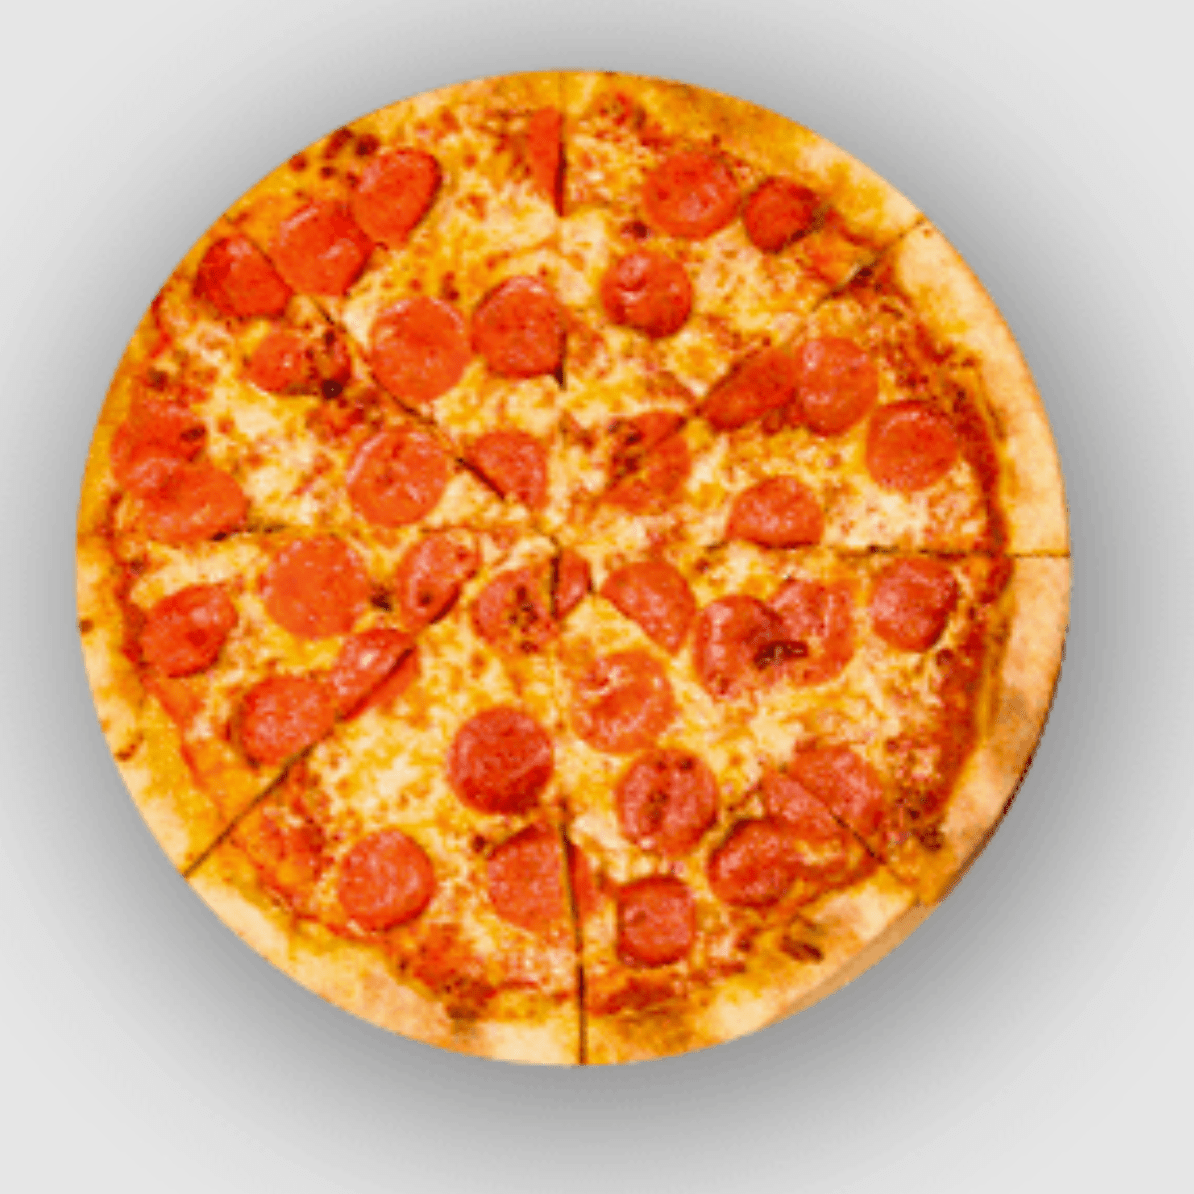 Wawa 14" Pepperoni Pizza Nutrition Facts